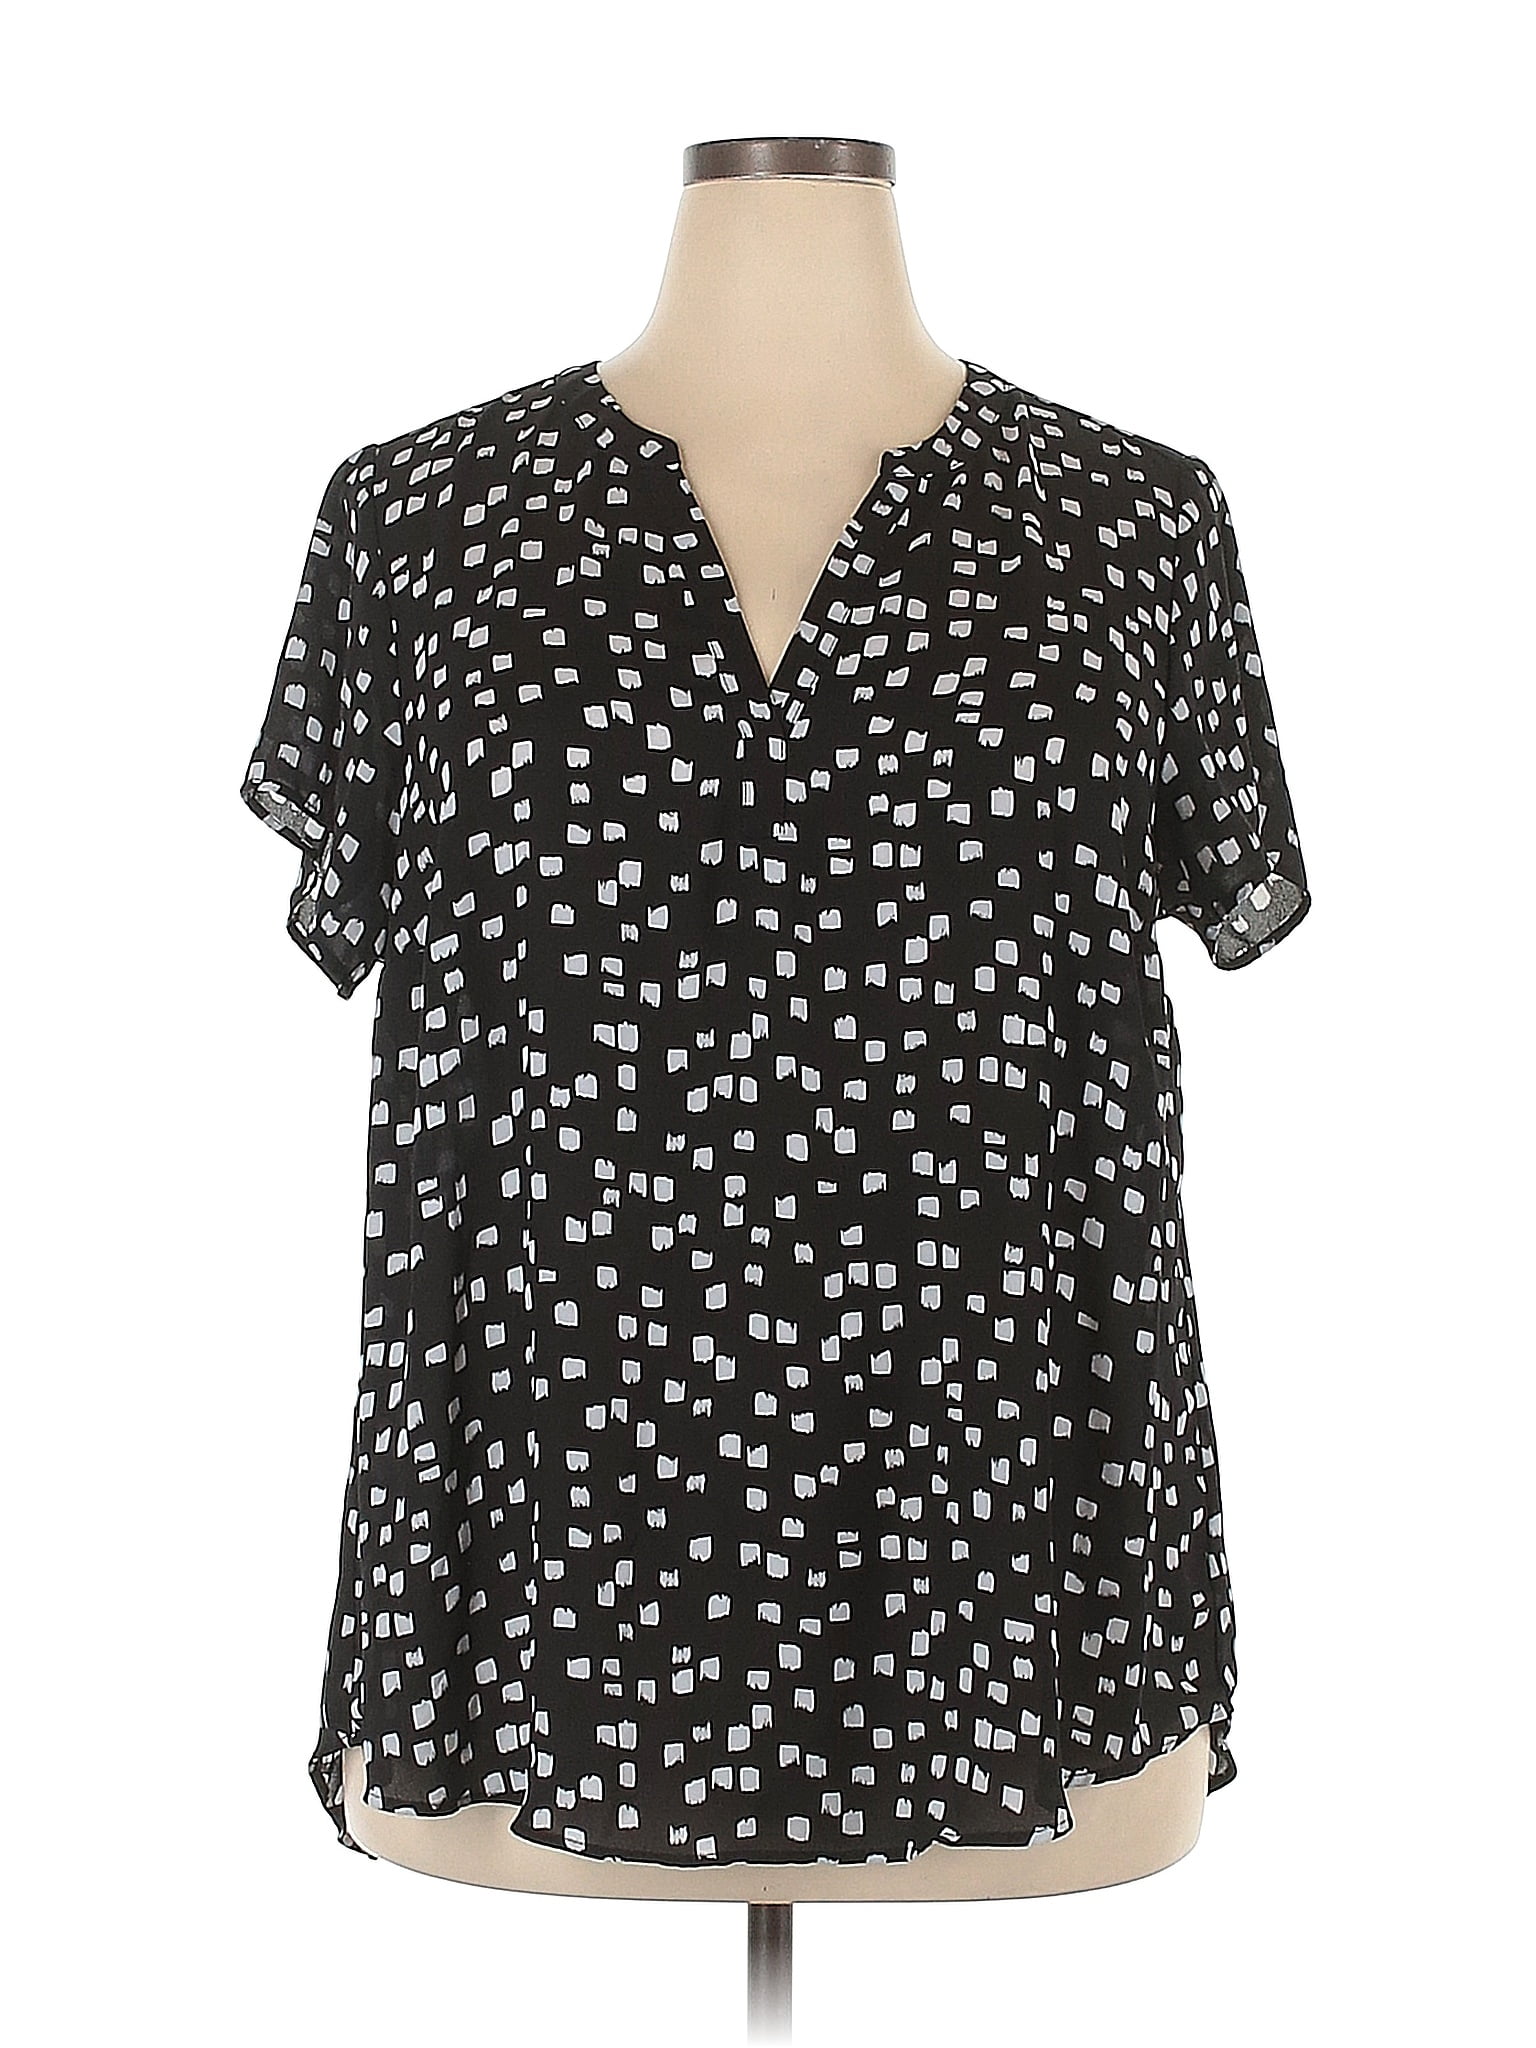 Torrid 100% Polyester Polka Dots Black Sleeveless Blouse Size 2X Plus ...